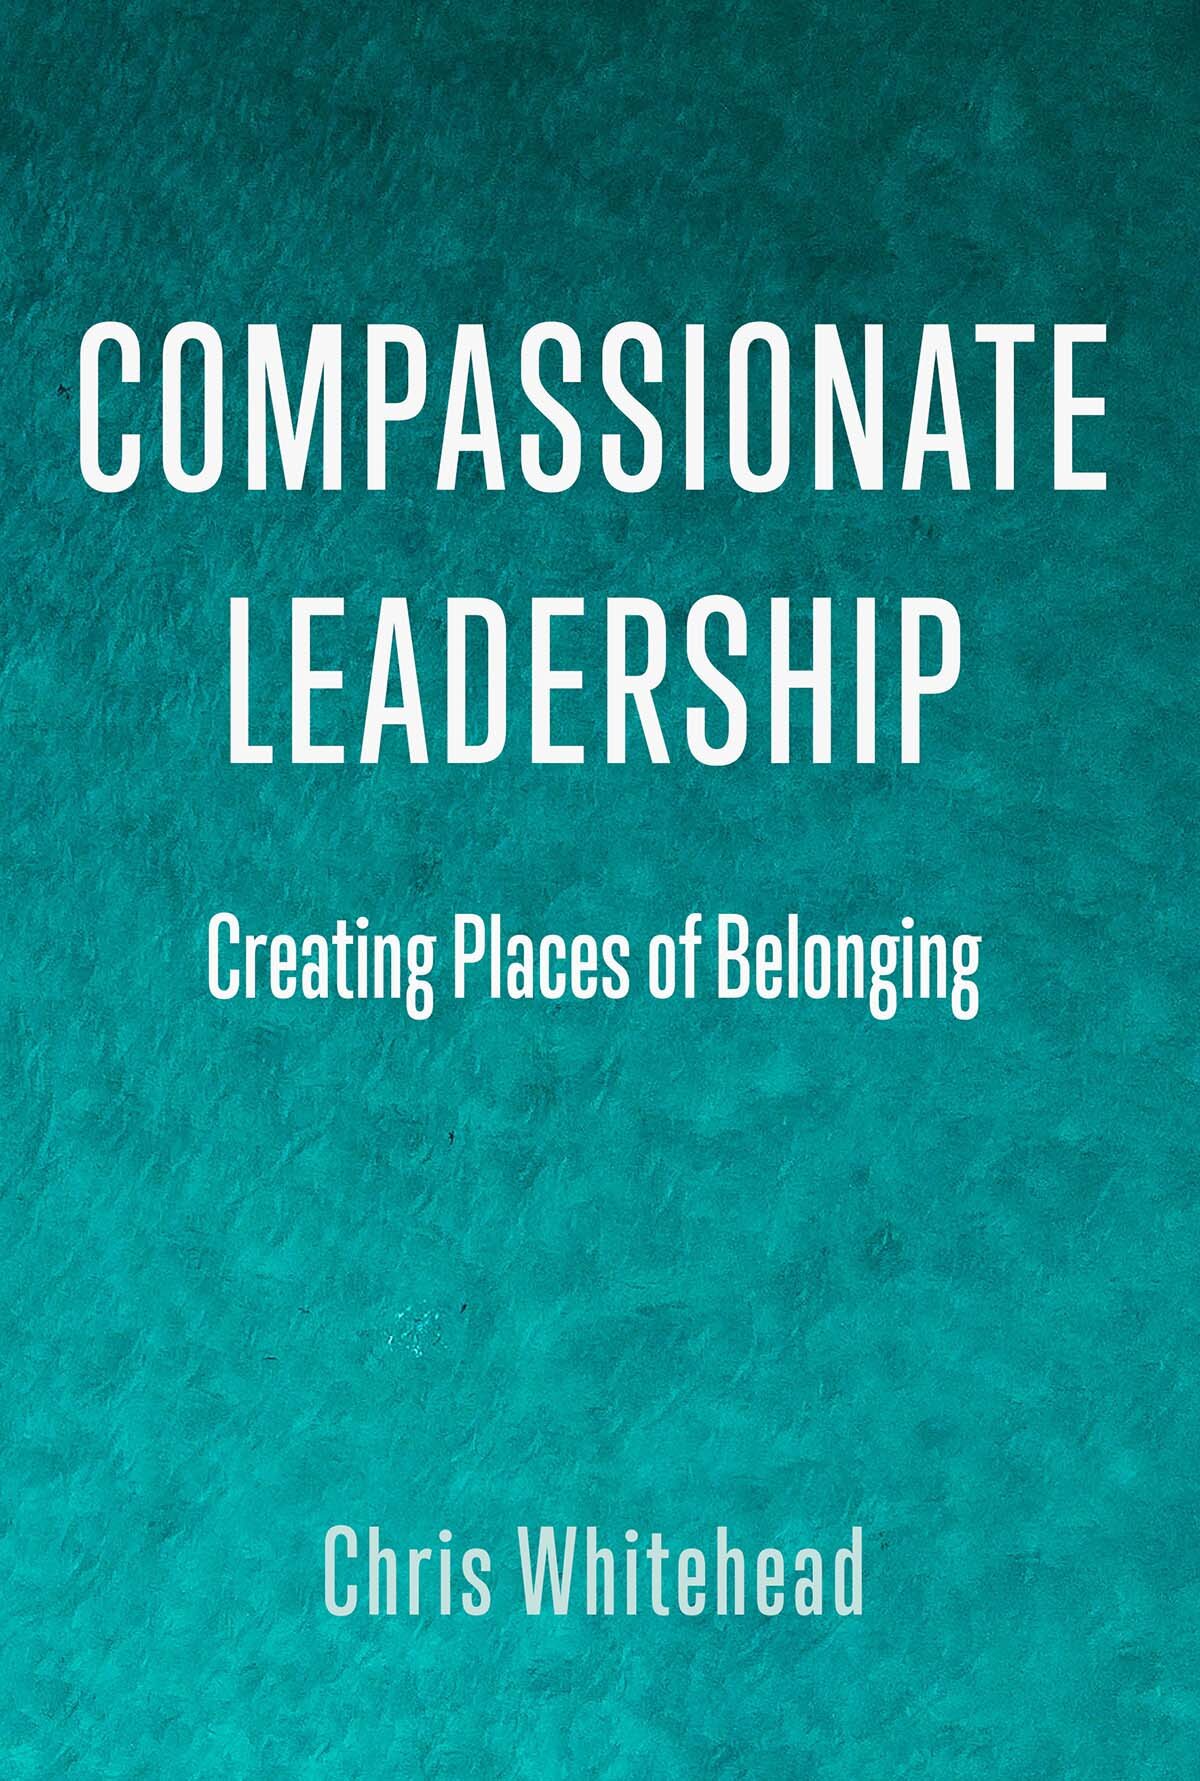 Blog » Life Centers » We Choose Compassion